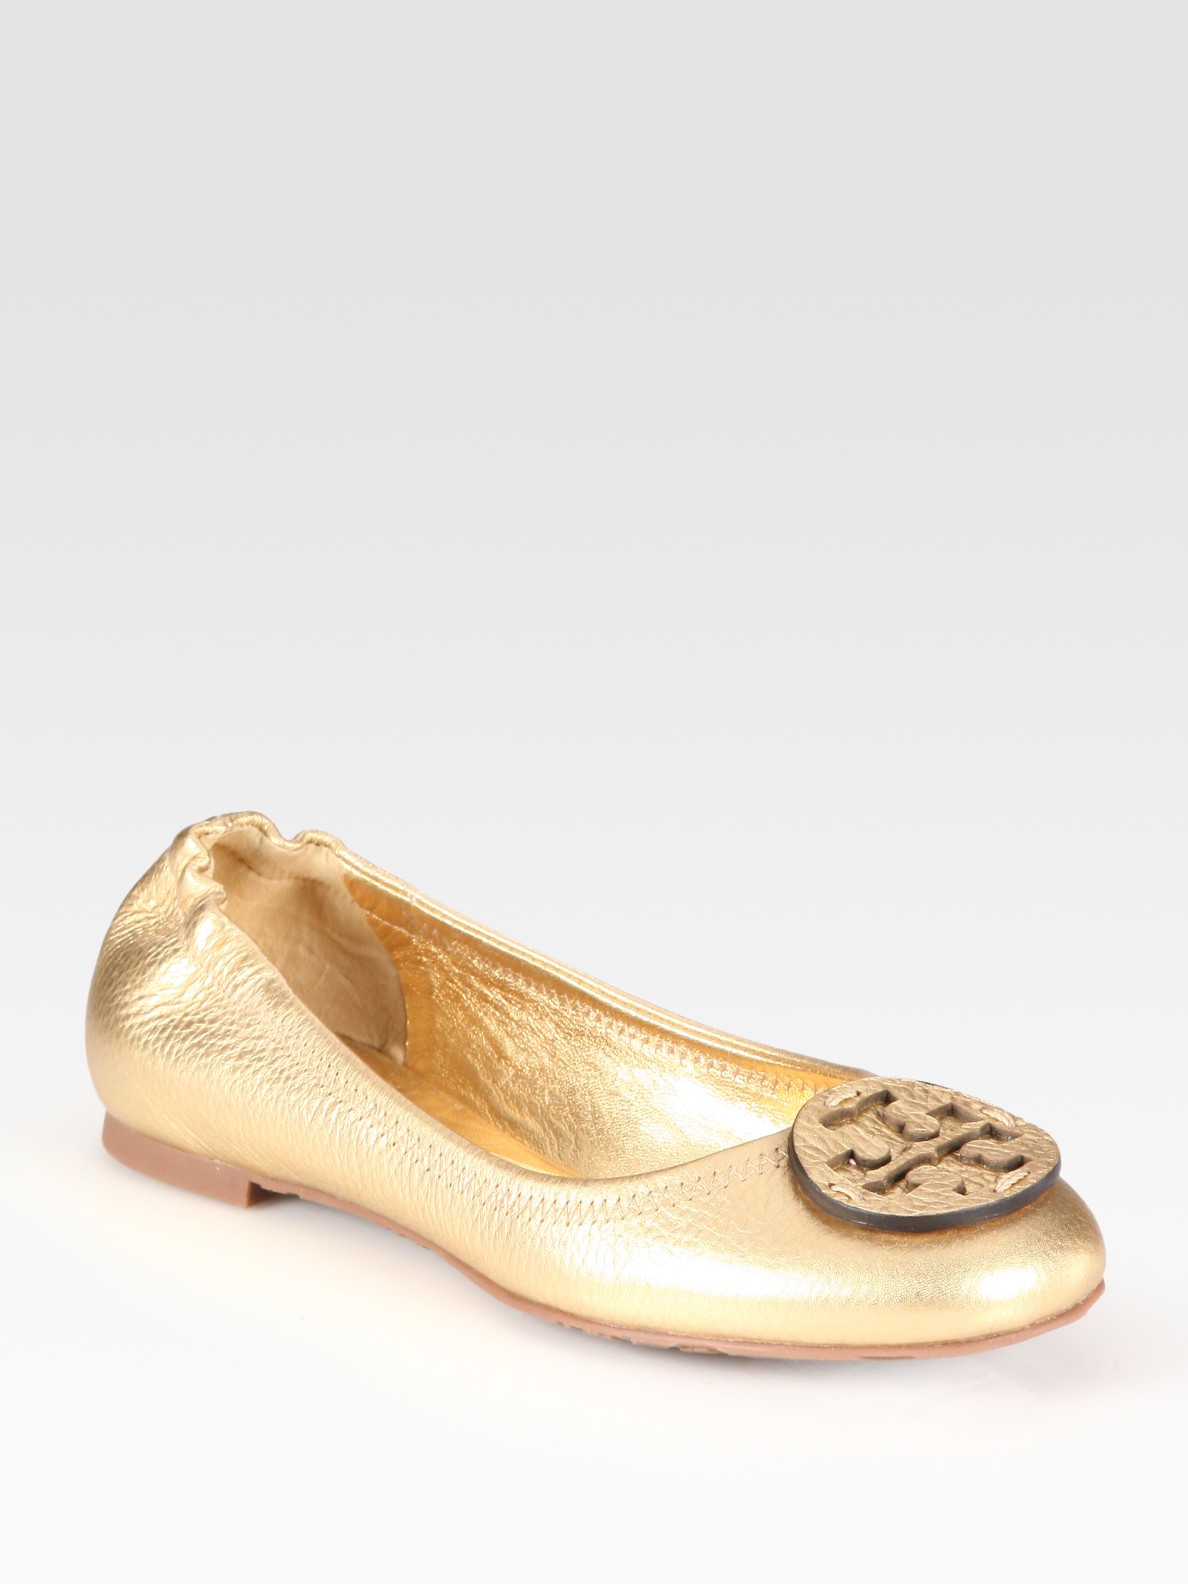 Tory Burch Reva Metallic Pebbled Leather Logo Ballet Flats in Gold | Lyst